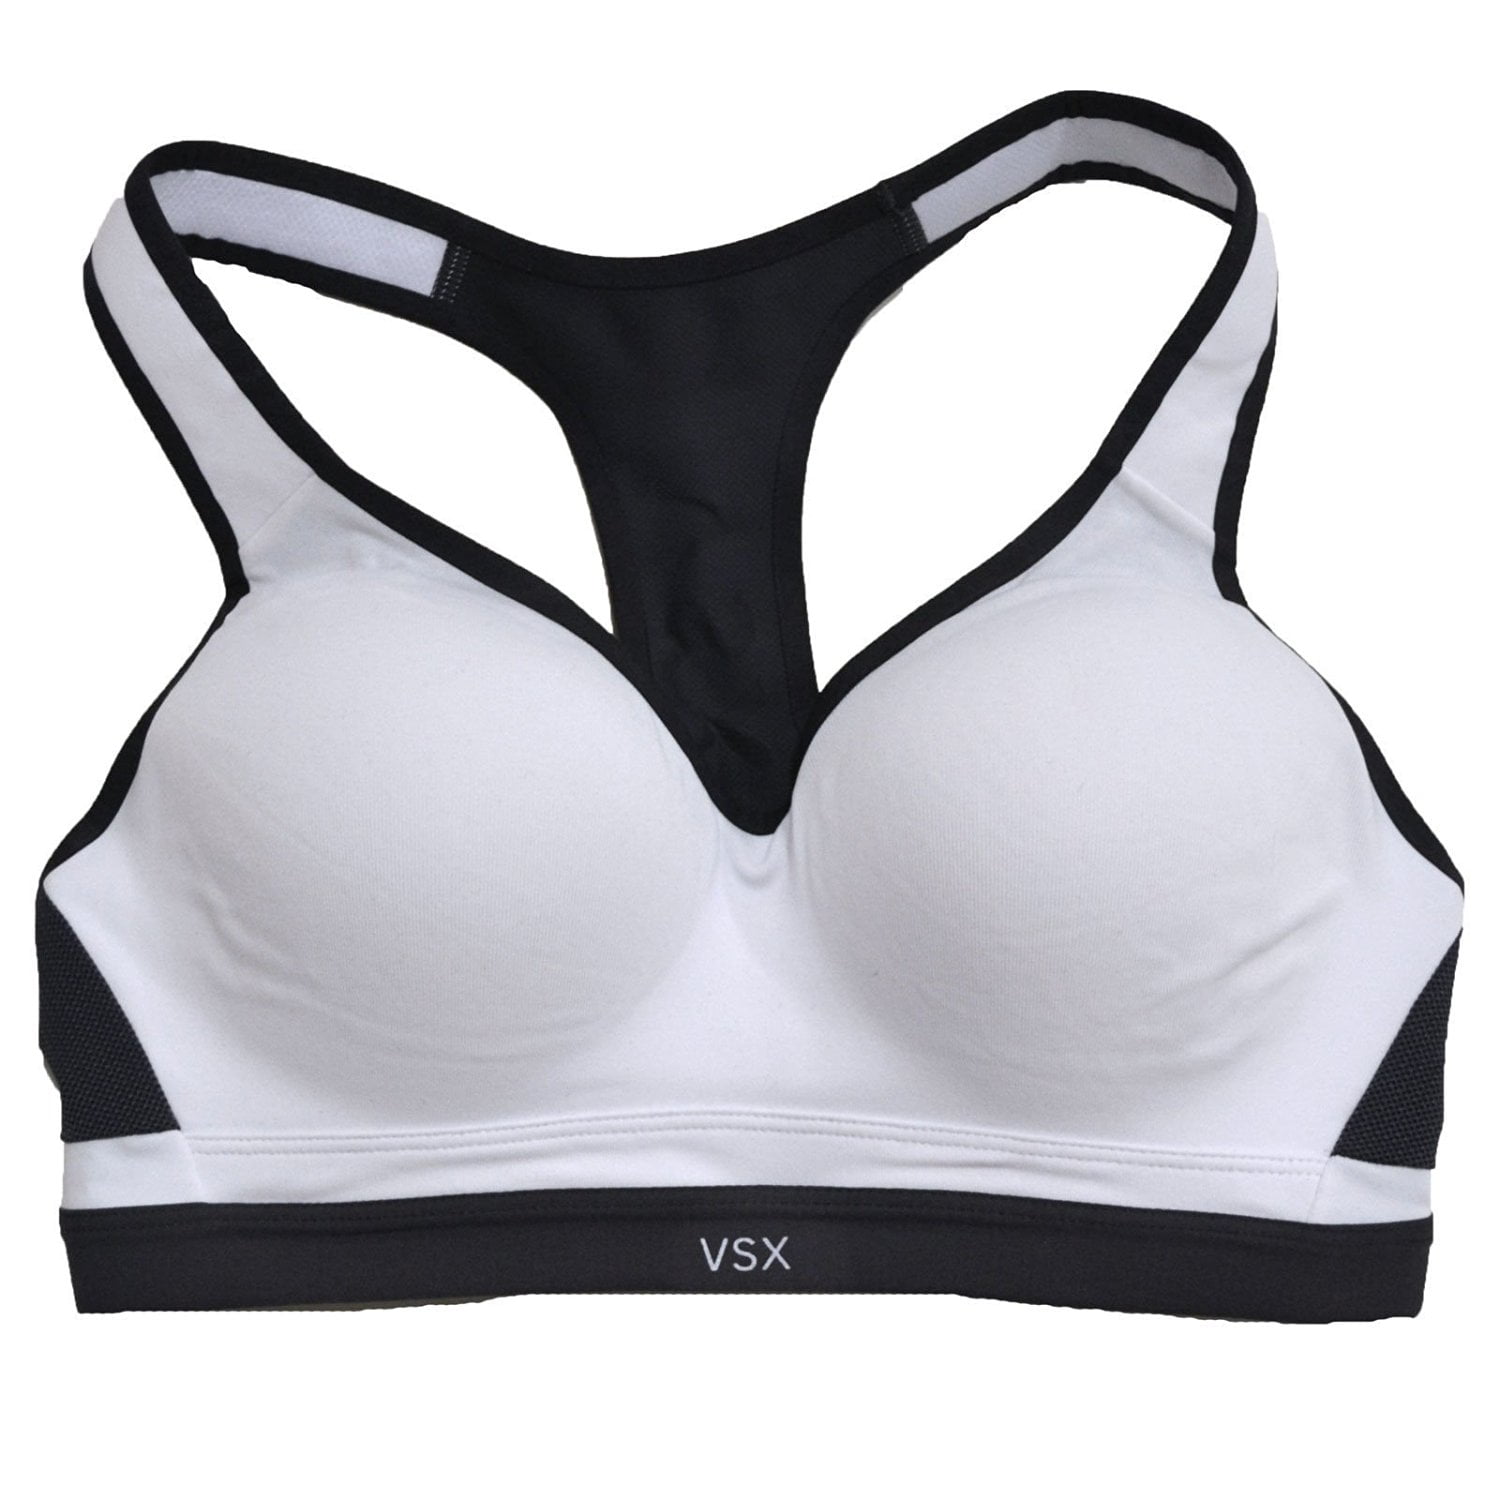 Victoria secret sport white sports bra with silver - Depop